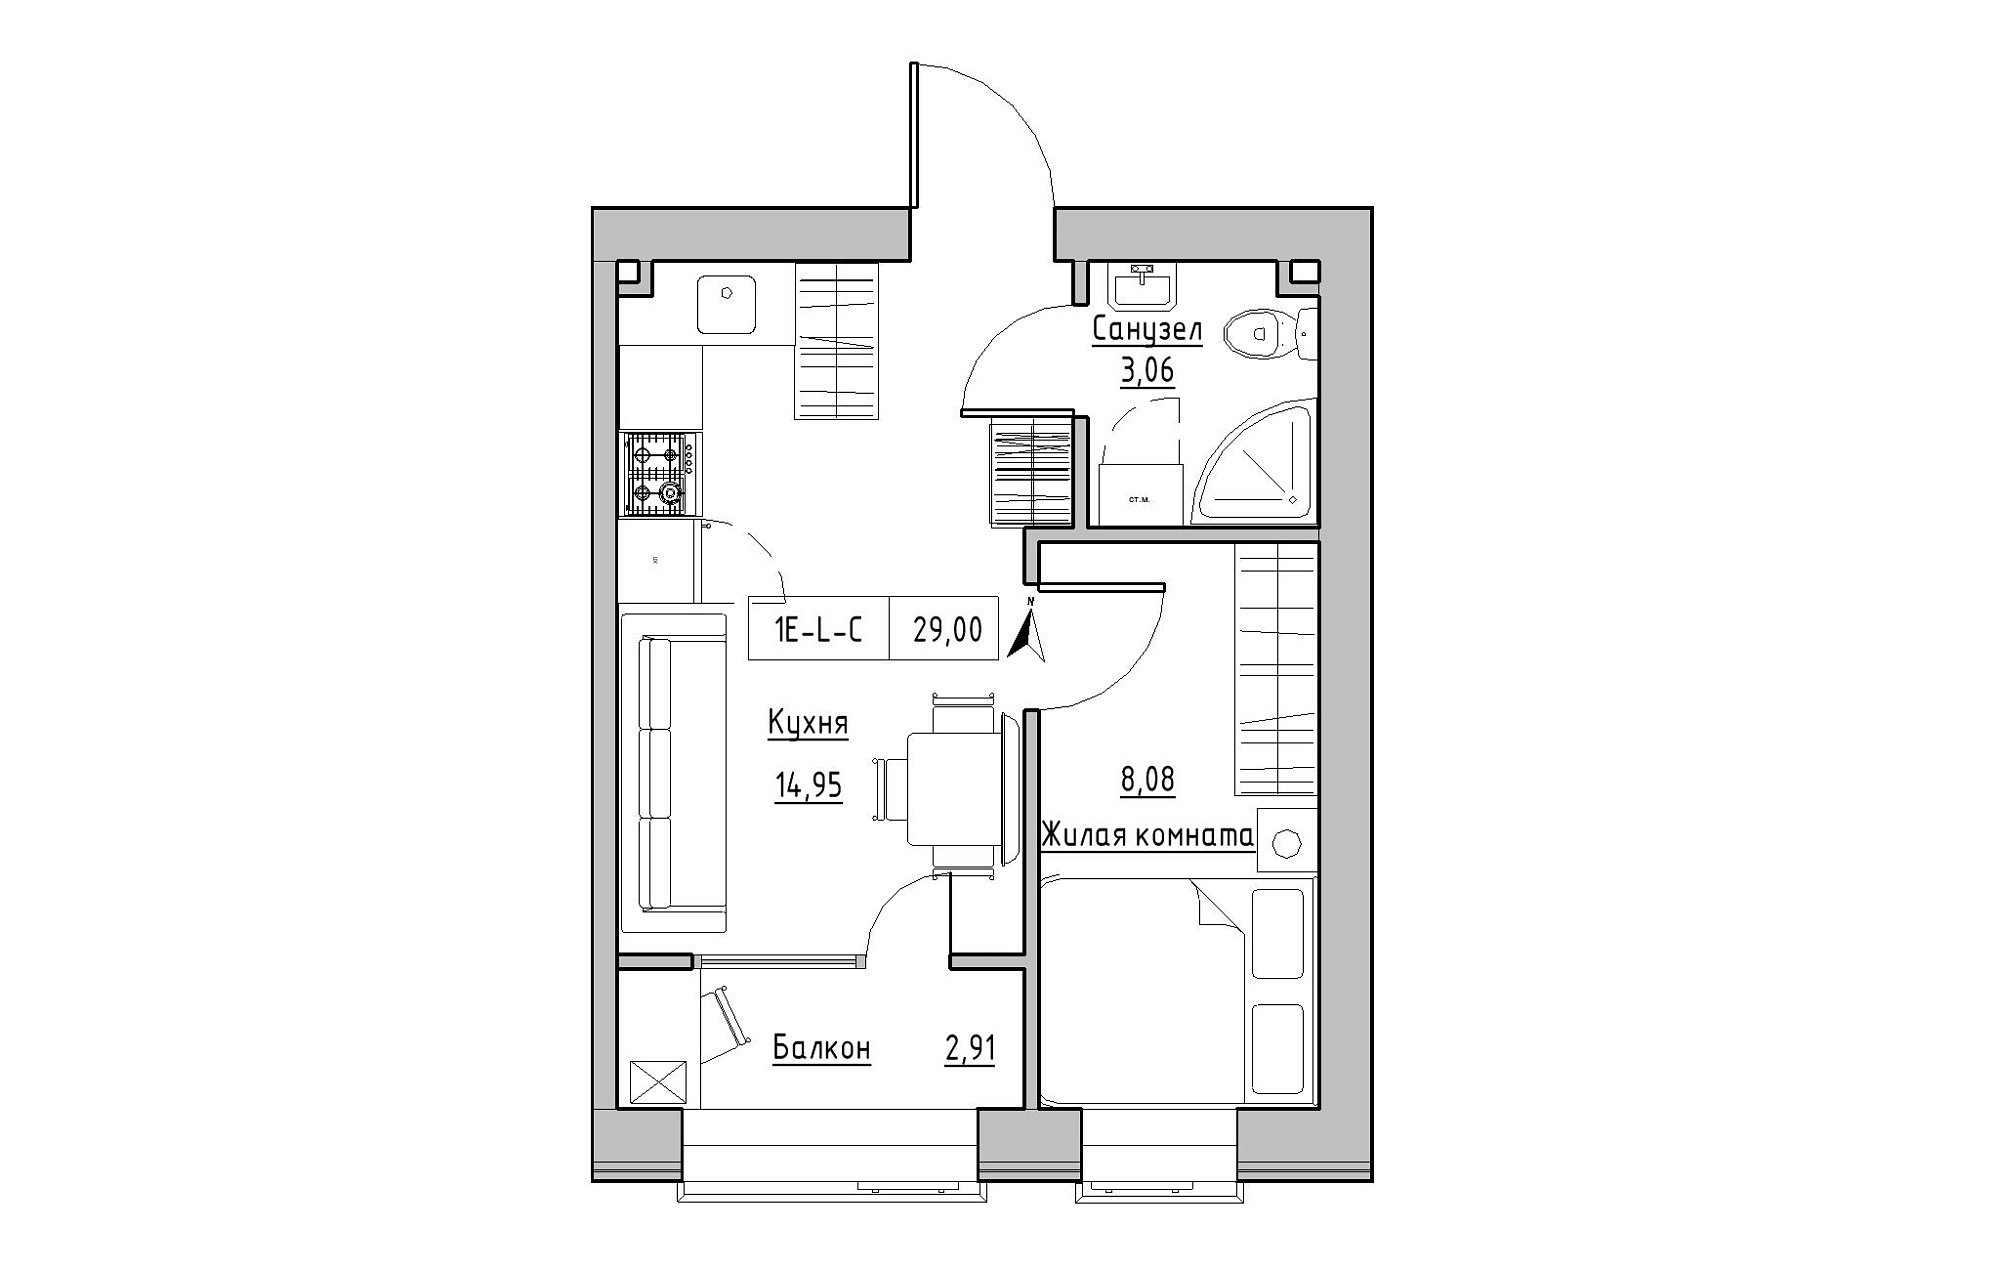 Planning 1-rm flats area 29m2, KS-019-02/0009.